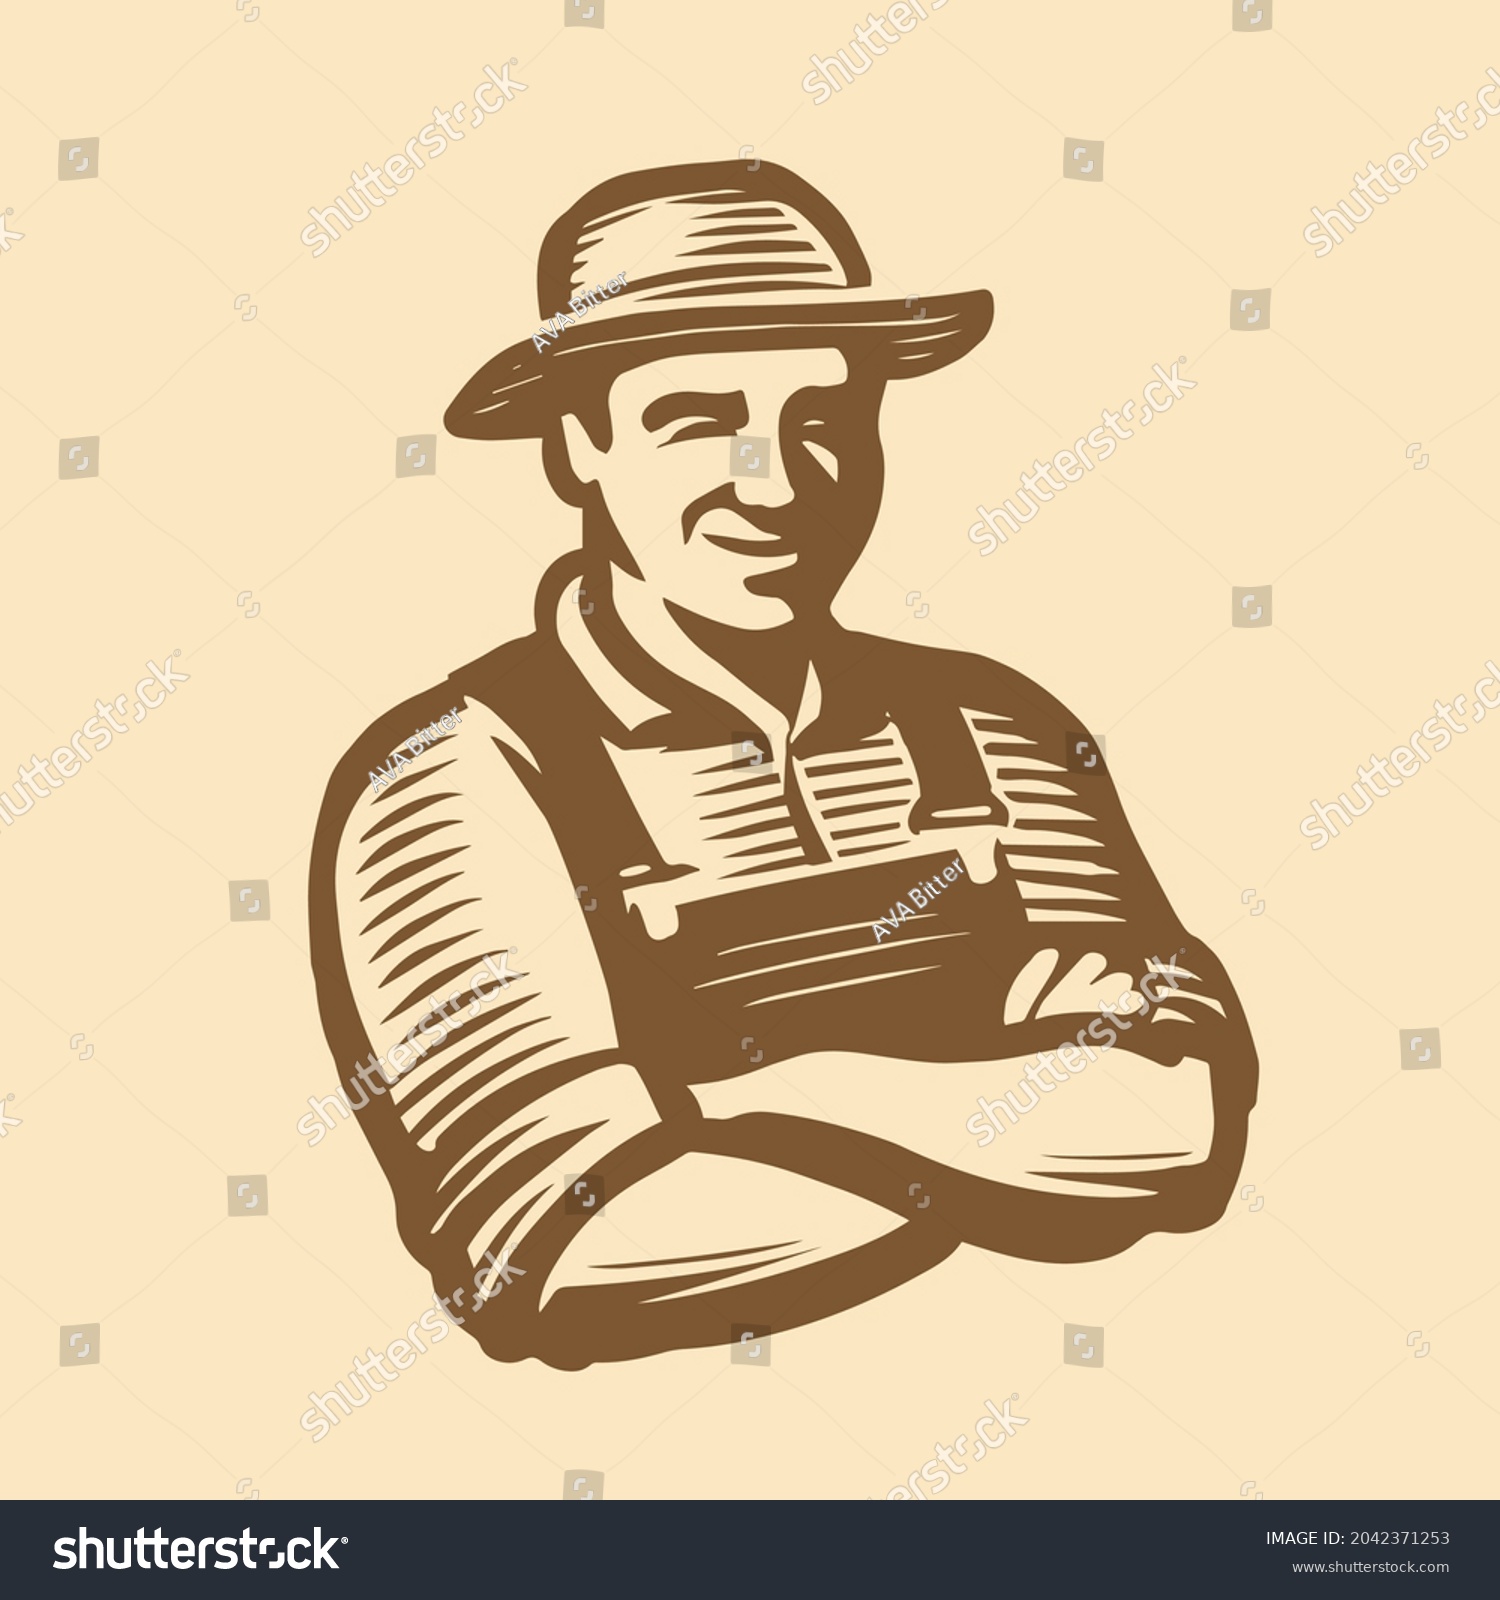 Farmer man logo. Farm, agriculture symbol in engraving style. Sketch vintage vector illustration #2042371253